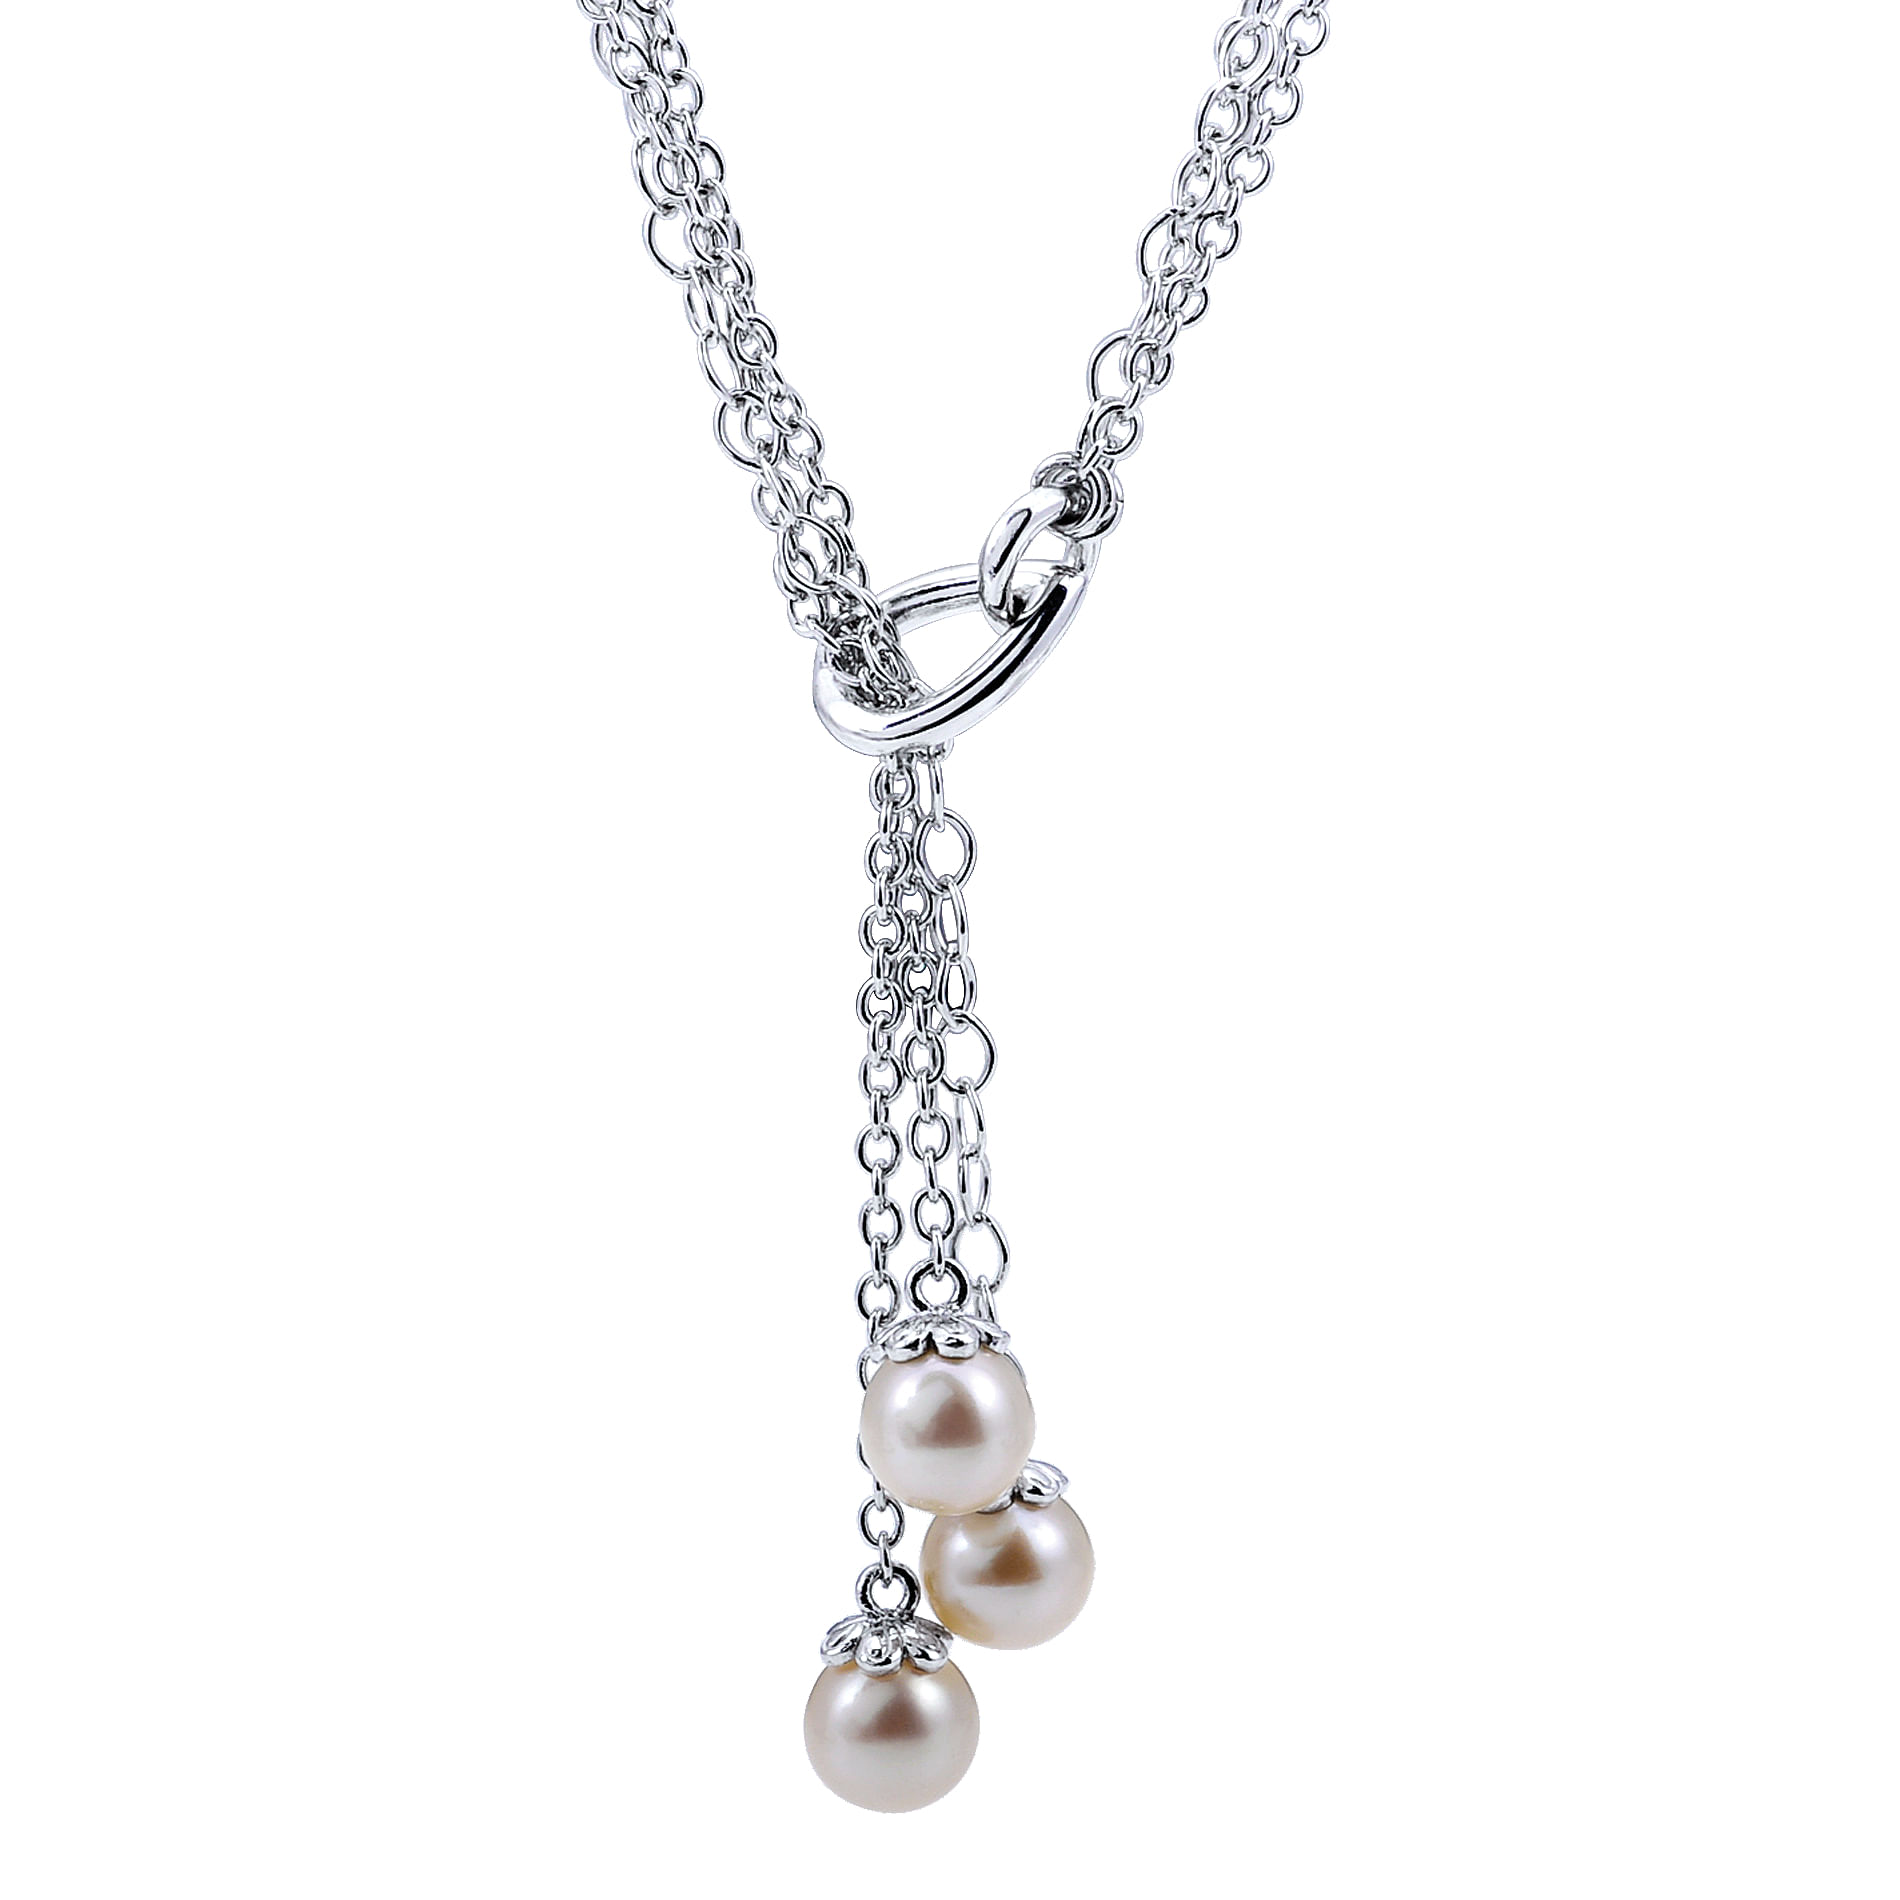 18 inch Silver Fashion Necklace